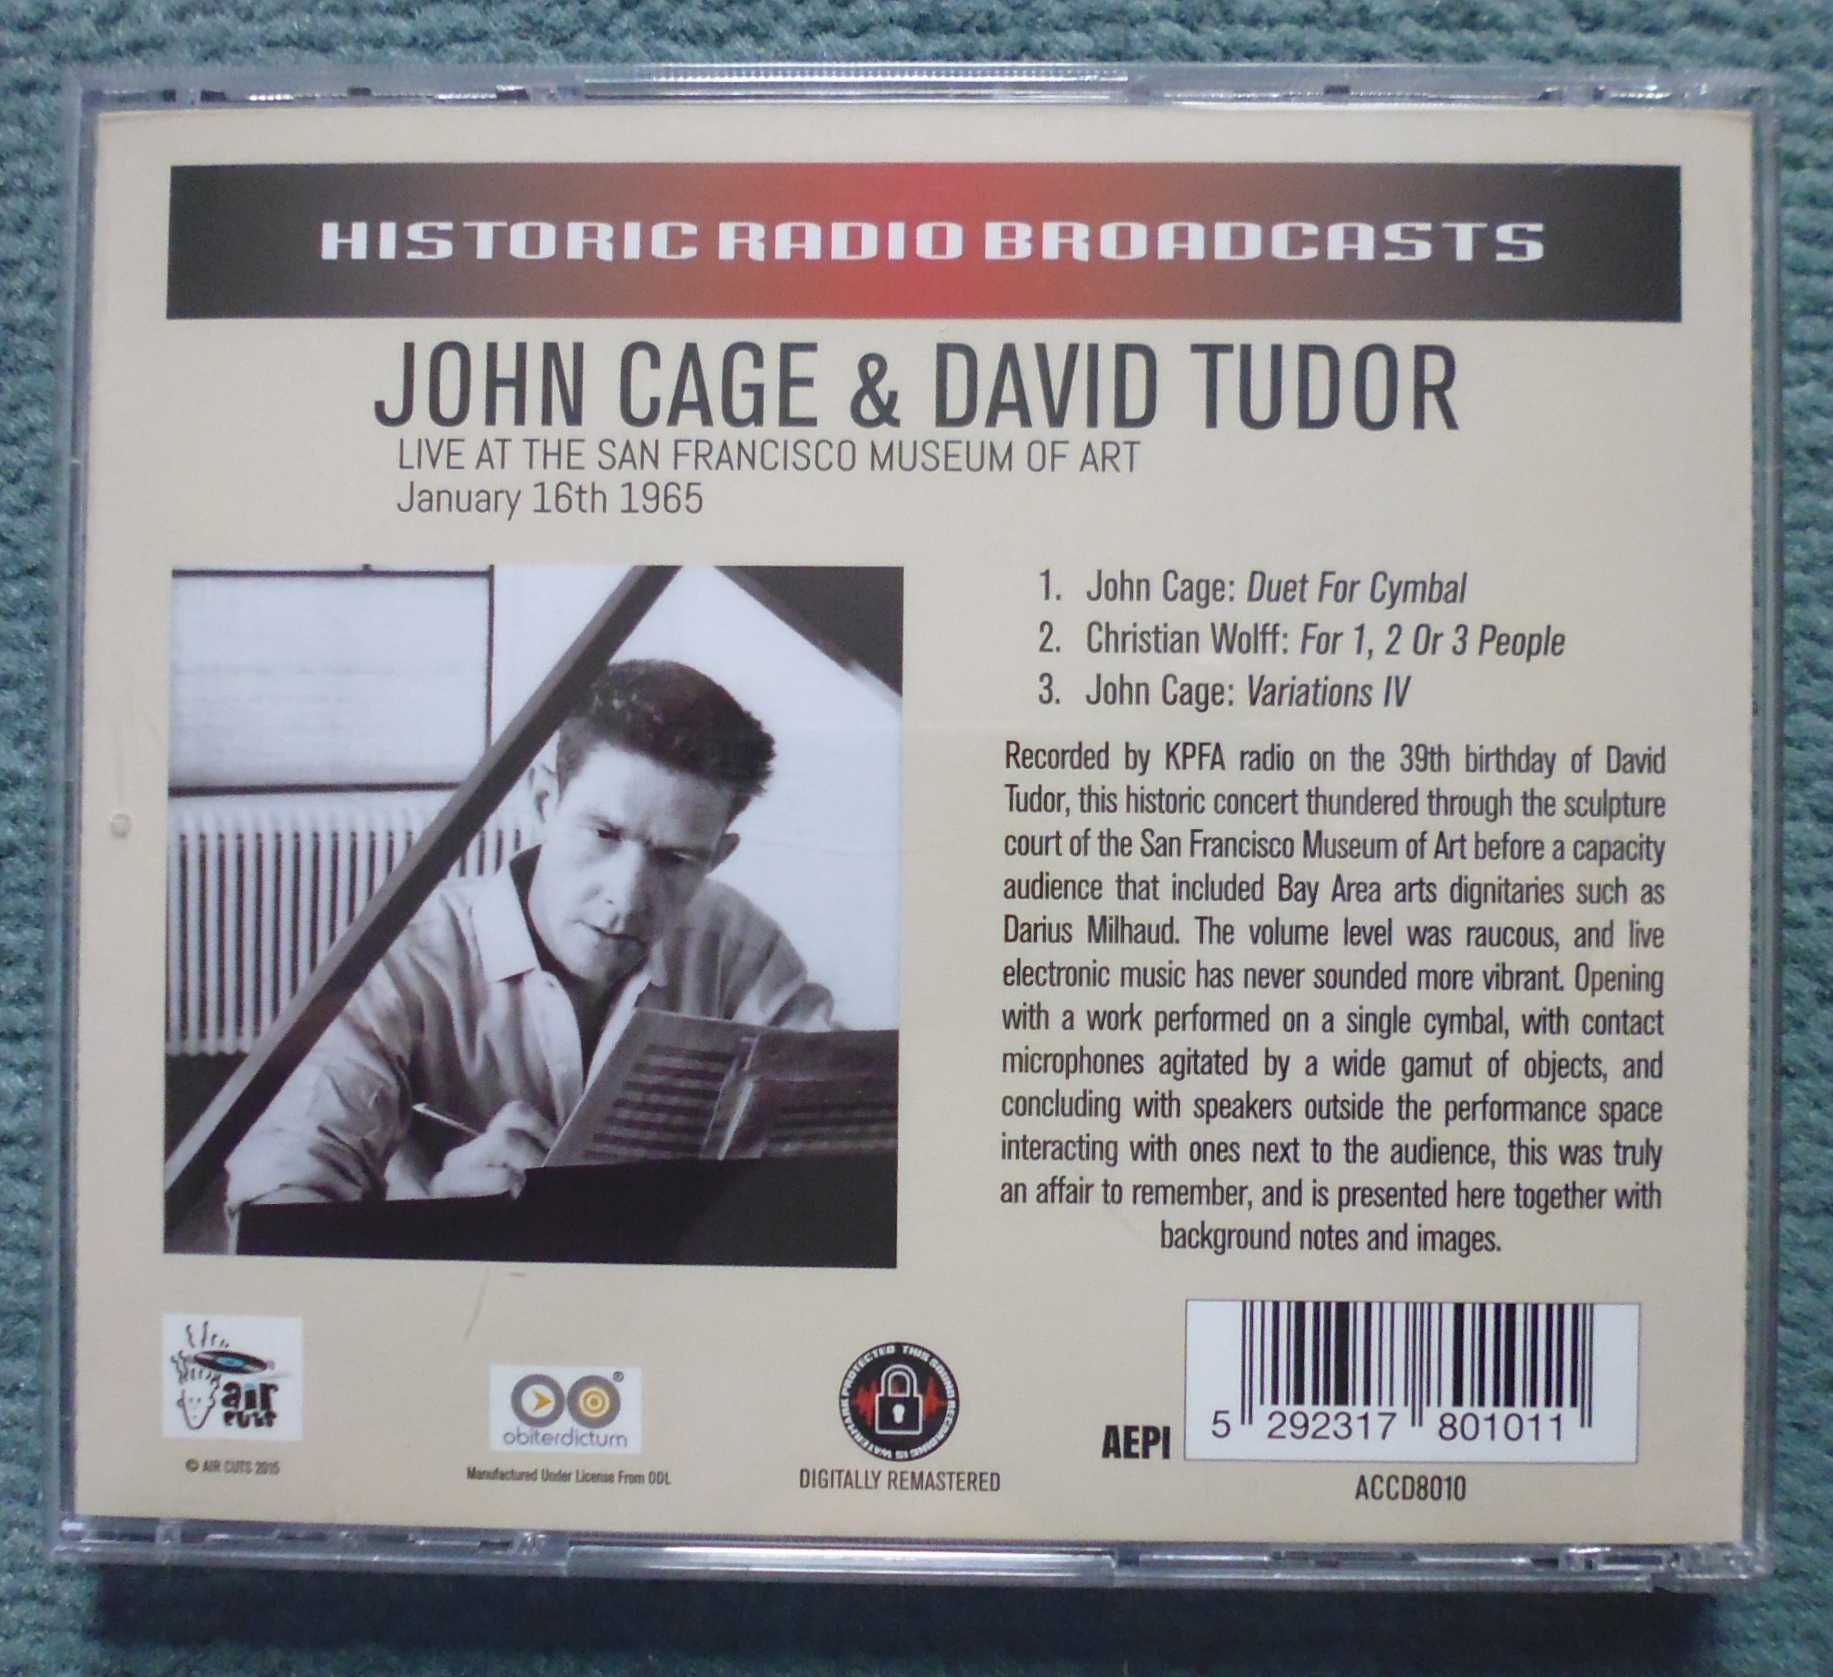 John Cage & David Tudor "Live at the San Francisco Museum of Art" 1965